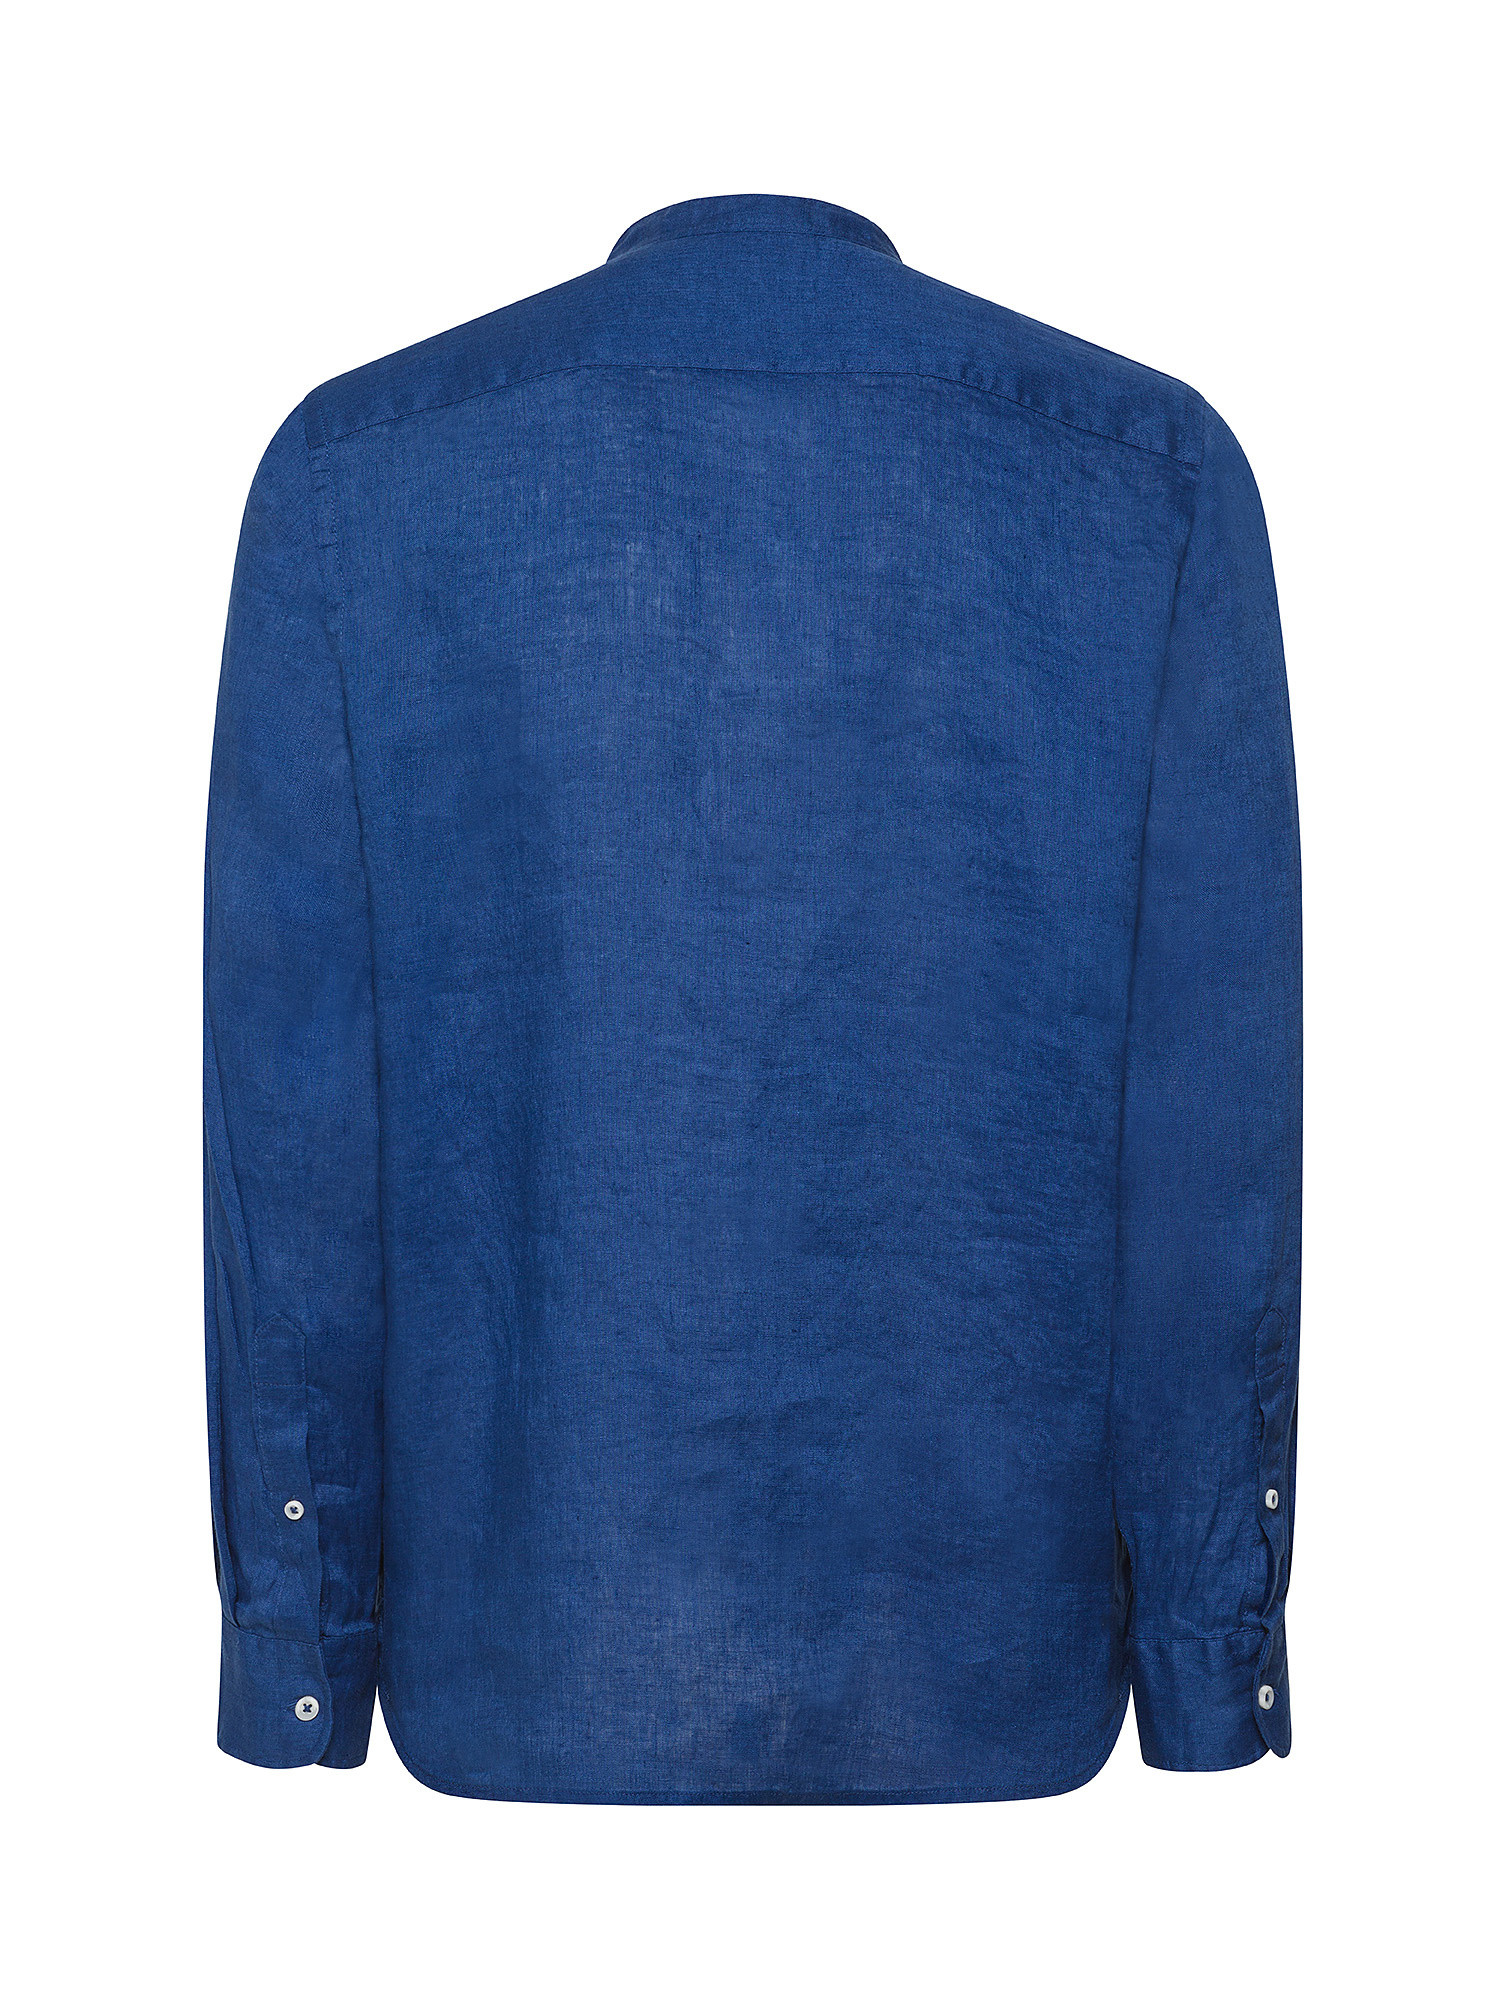 JCT - Pure linen Korean shirt, Royal Blue, large image number 1